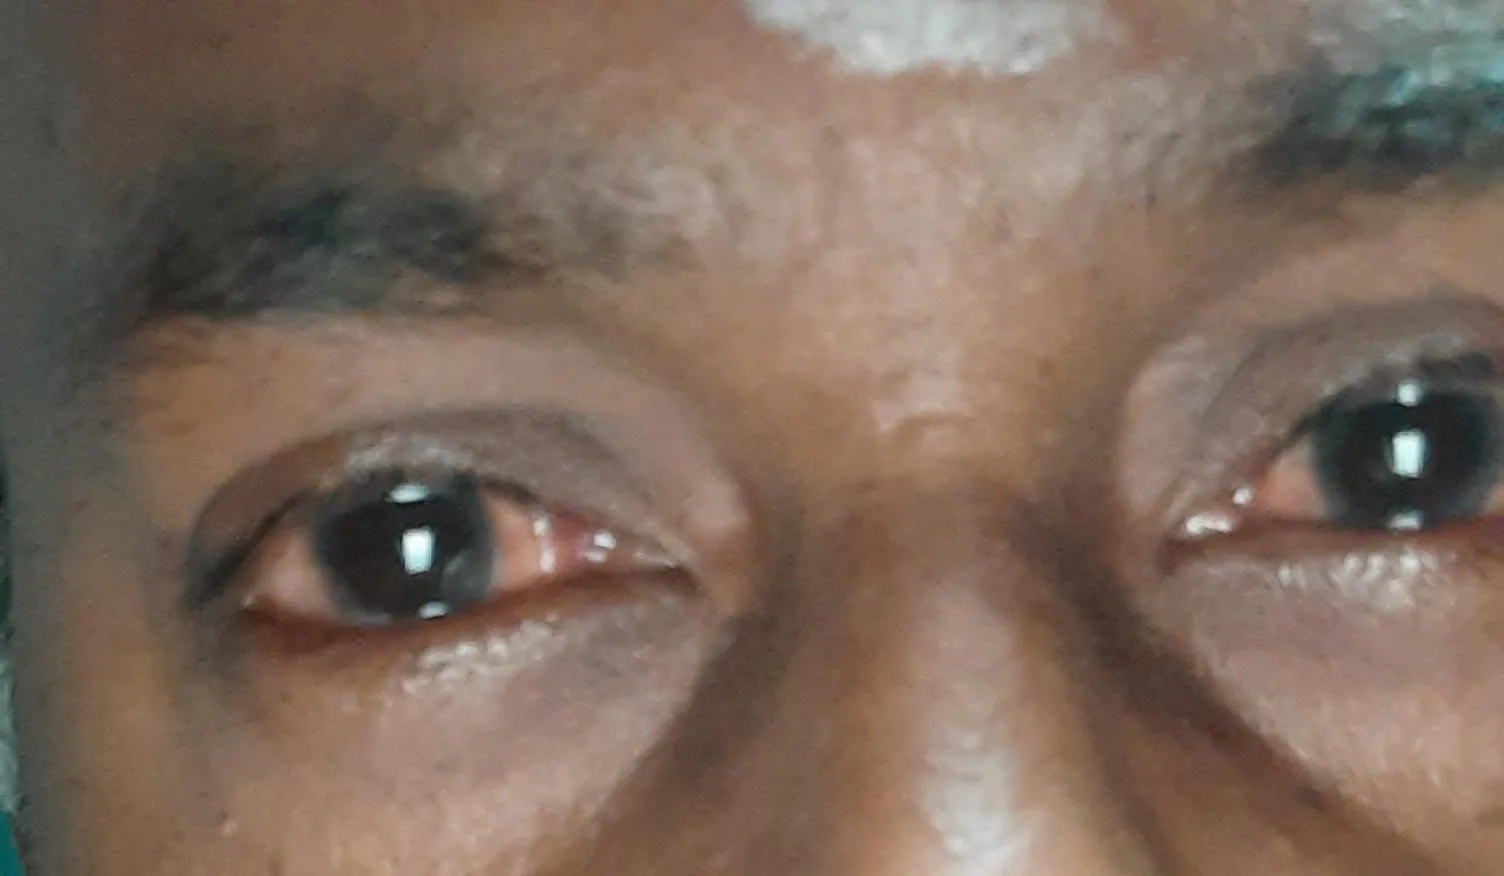 Madras eye